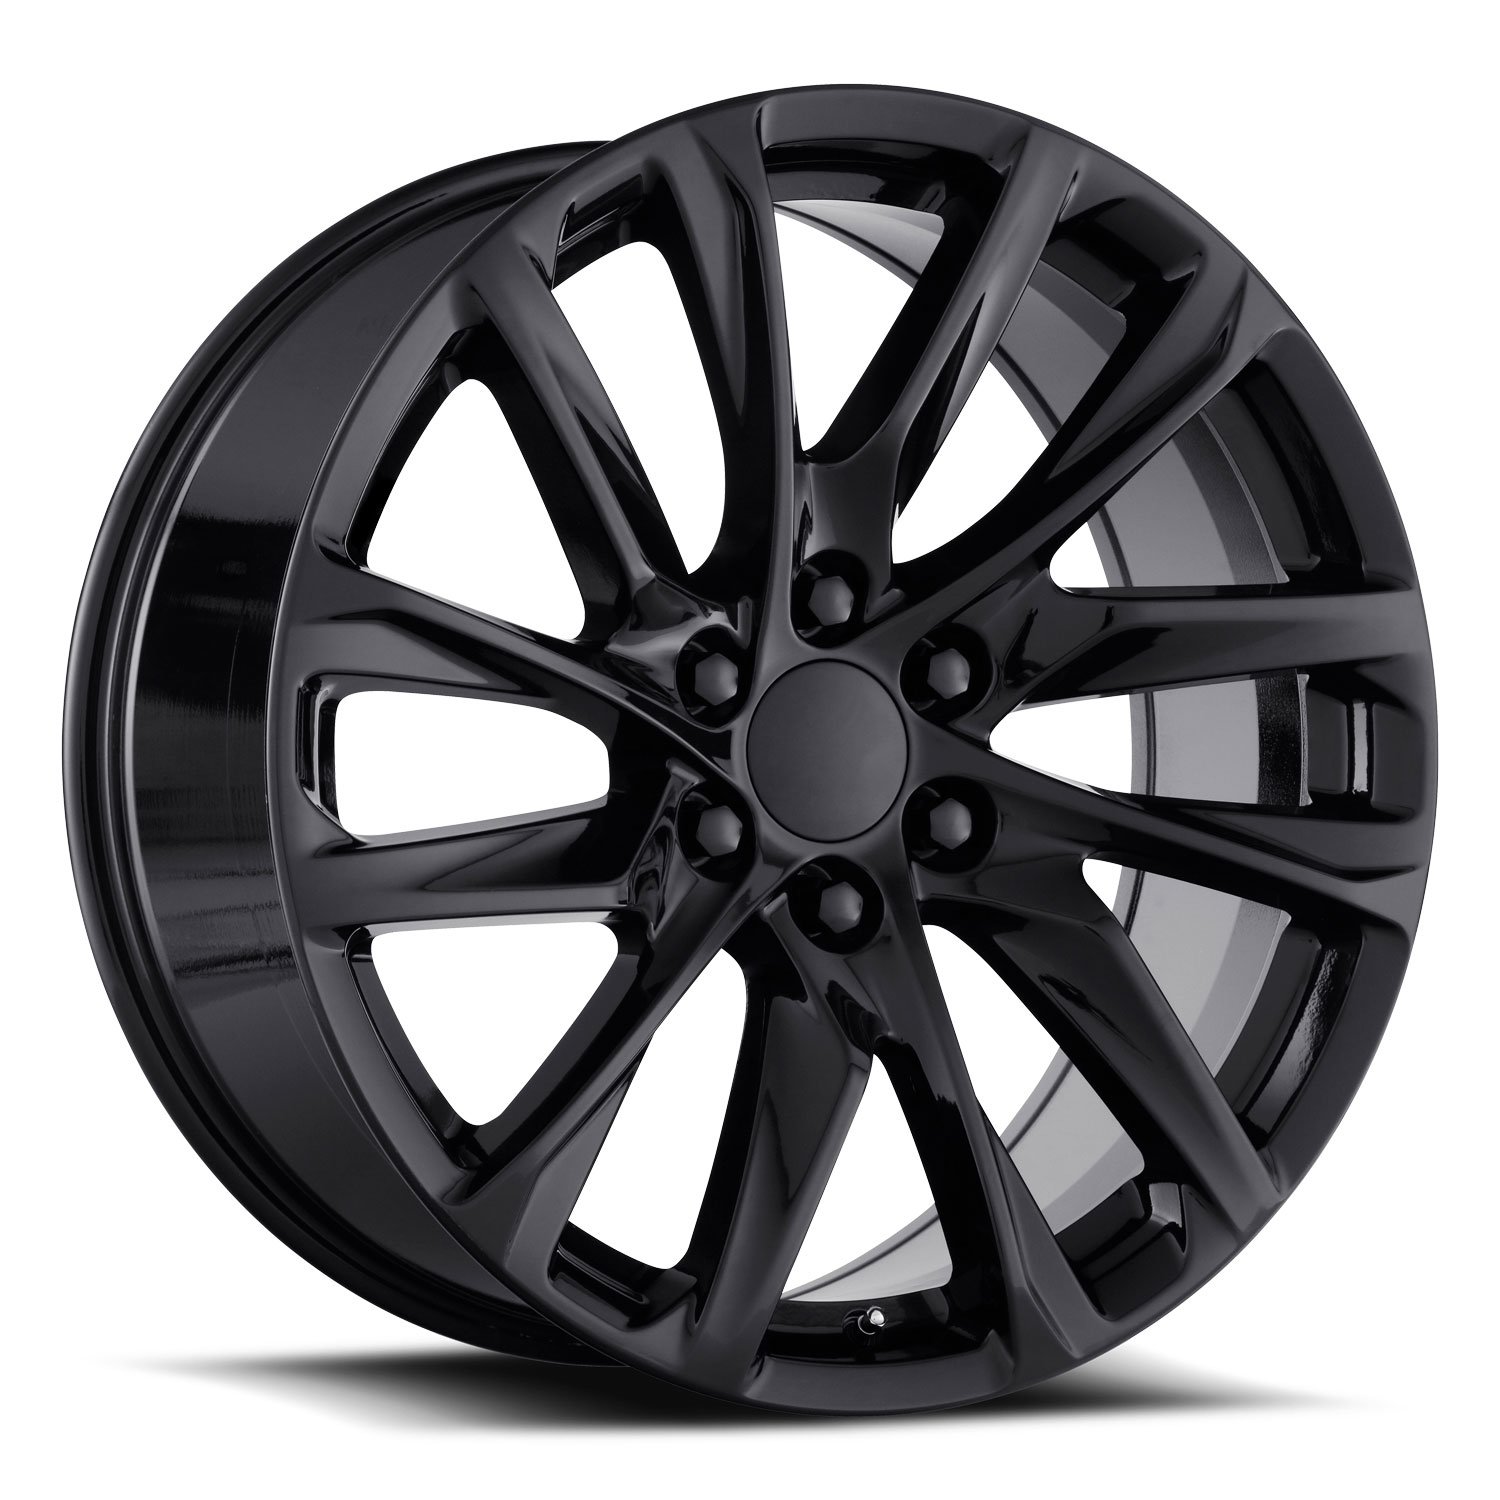 FR98-2290-6lug-Gloss-Black-02-GMC-Escalade-12-spoke-factory-reproductions-wheels-rims-std-1500